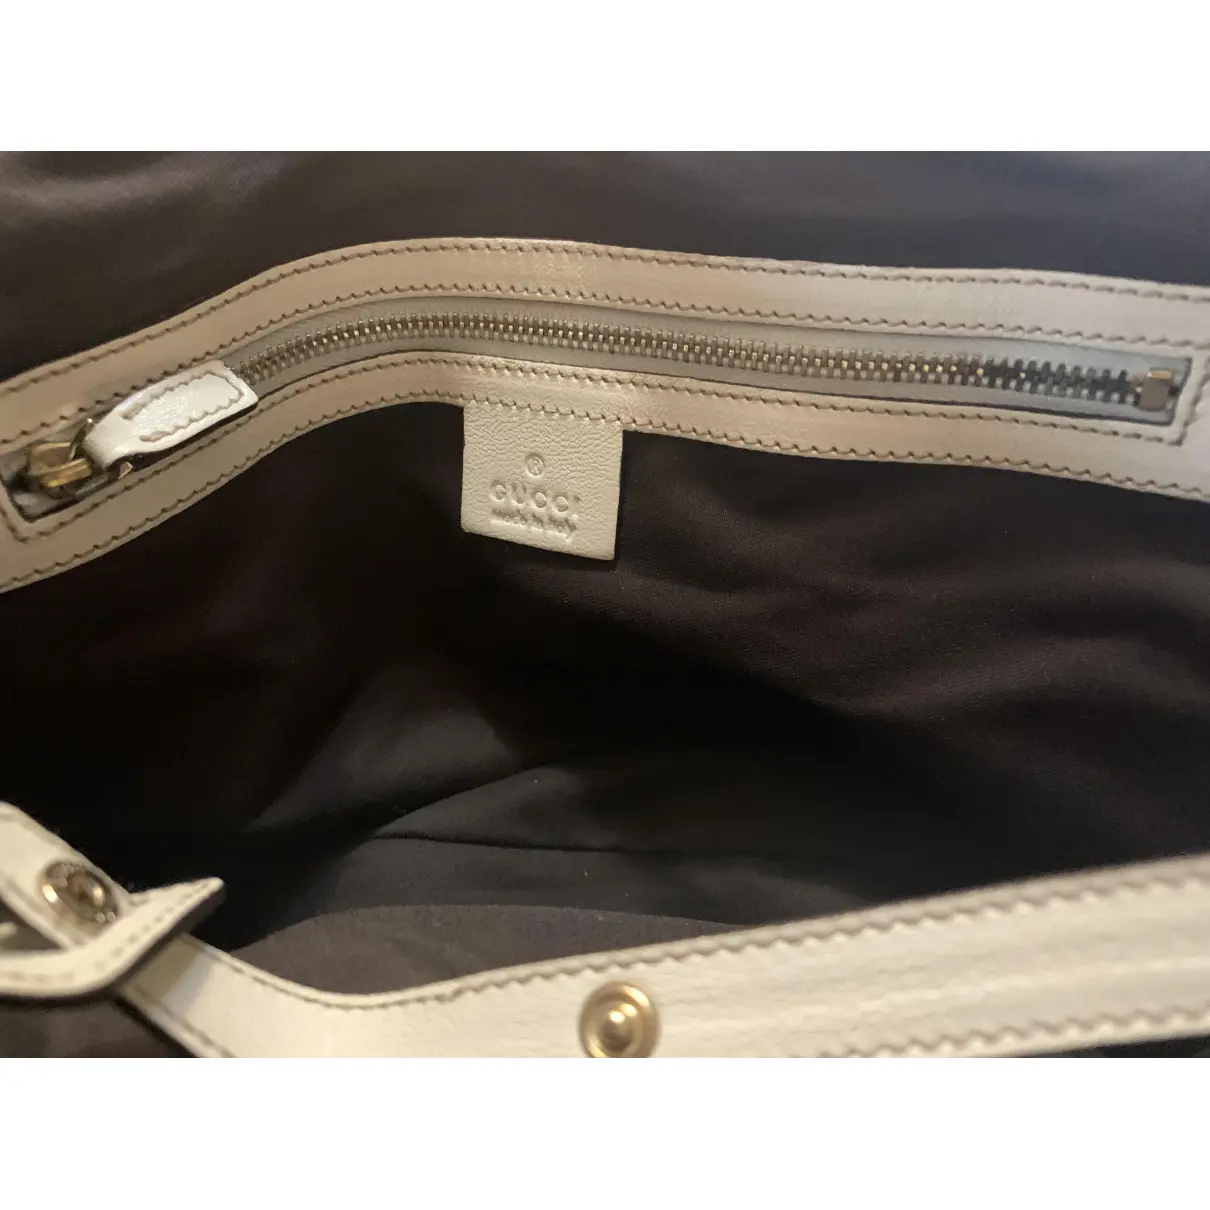 Buy Gucci Pelham cloth handbag online